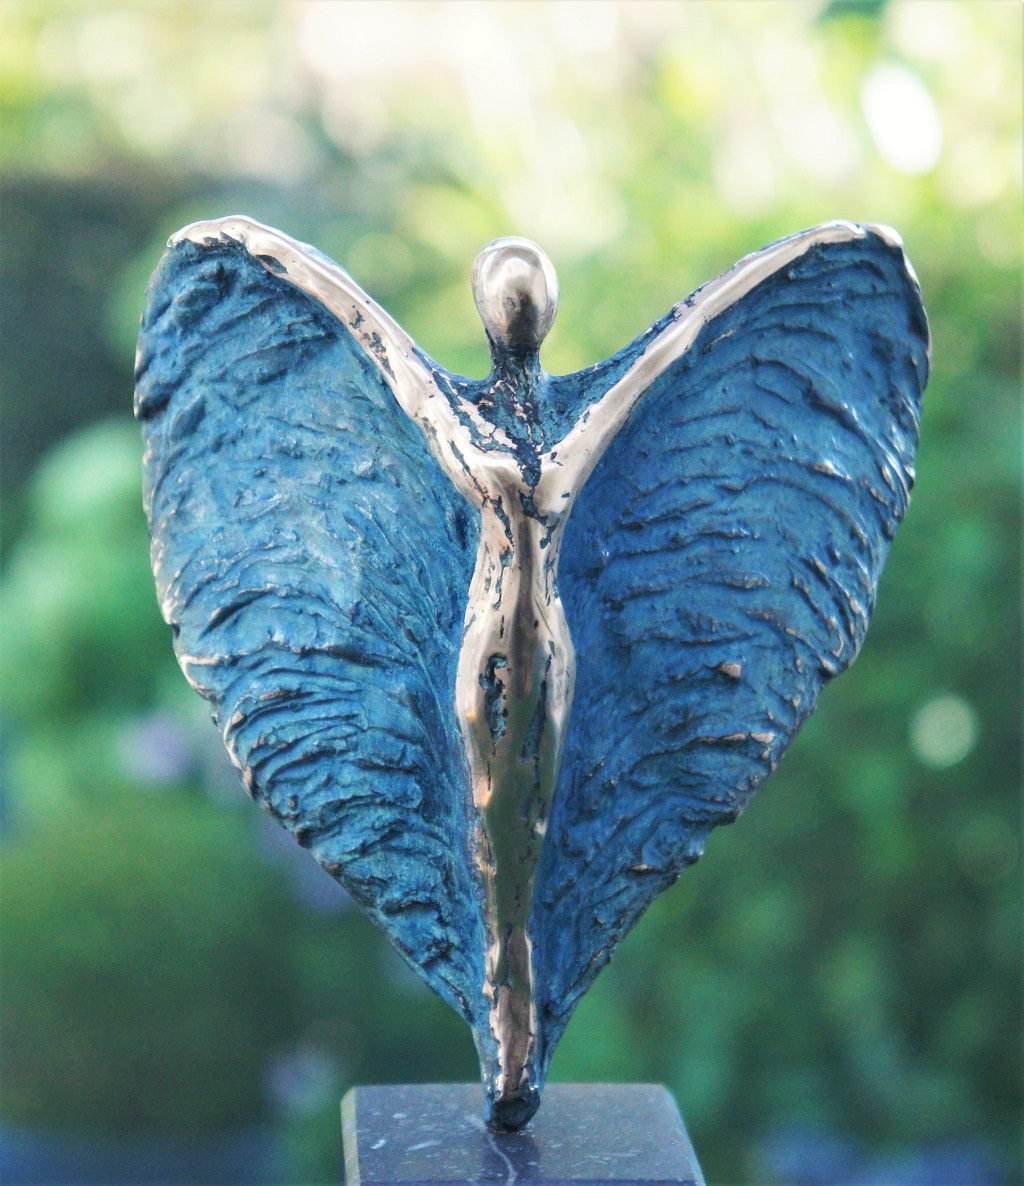 Blauwe engel brons Diane Timmer